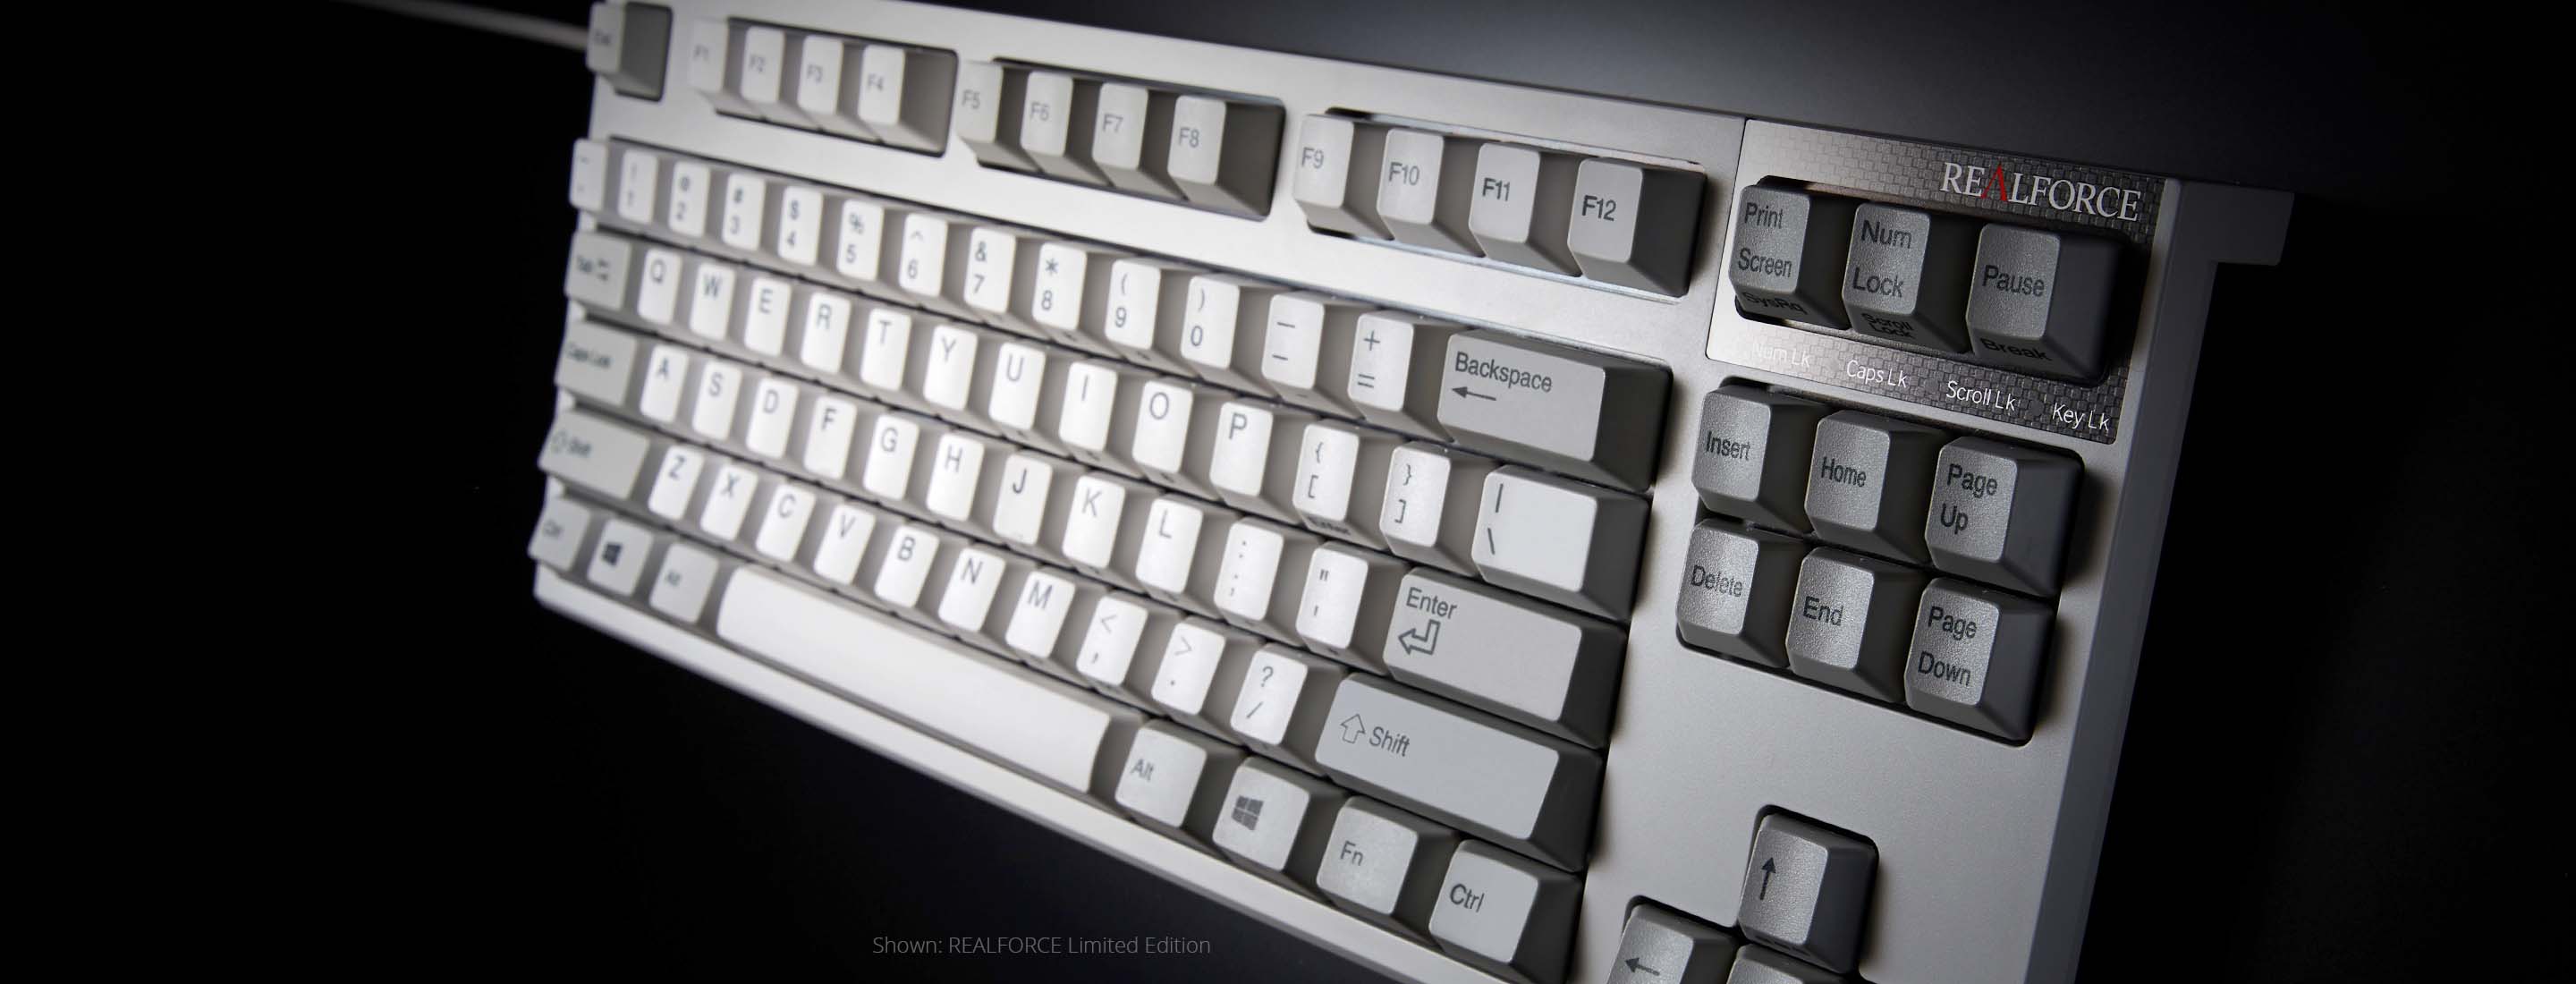 REALFORCE R2 Keyboard - HHKB REALFORCE Ergonomic Keyboard With 